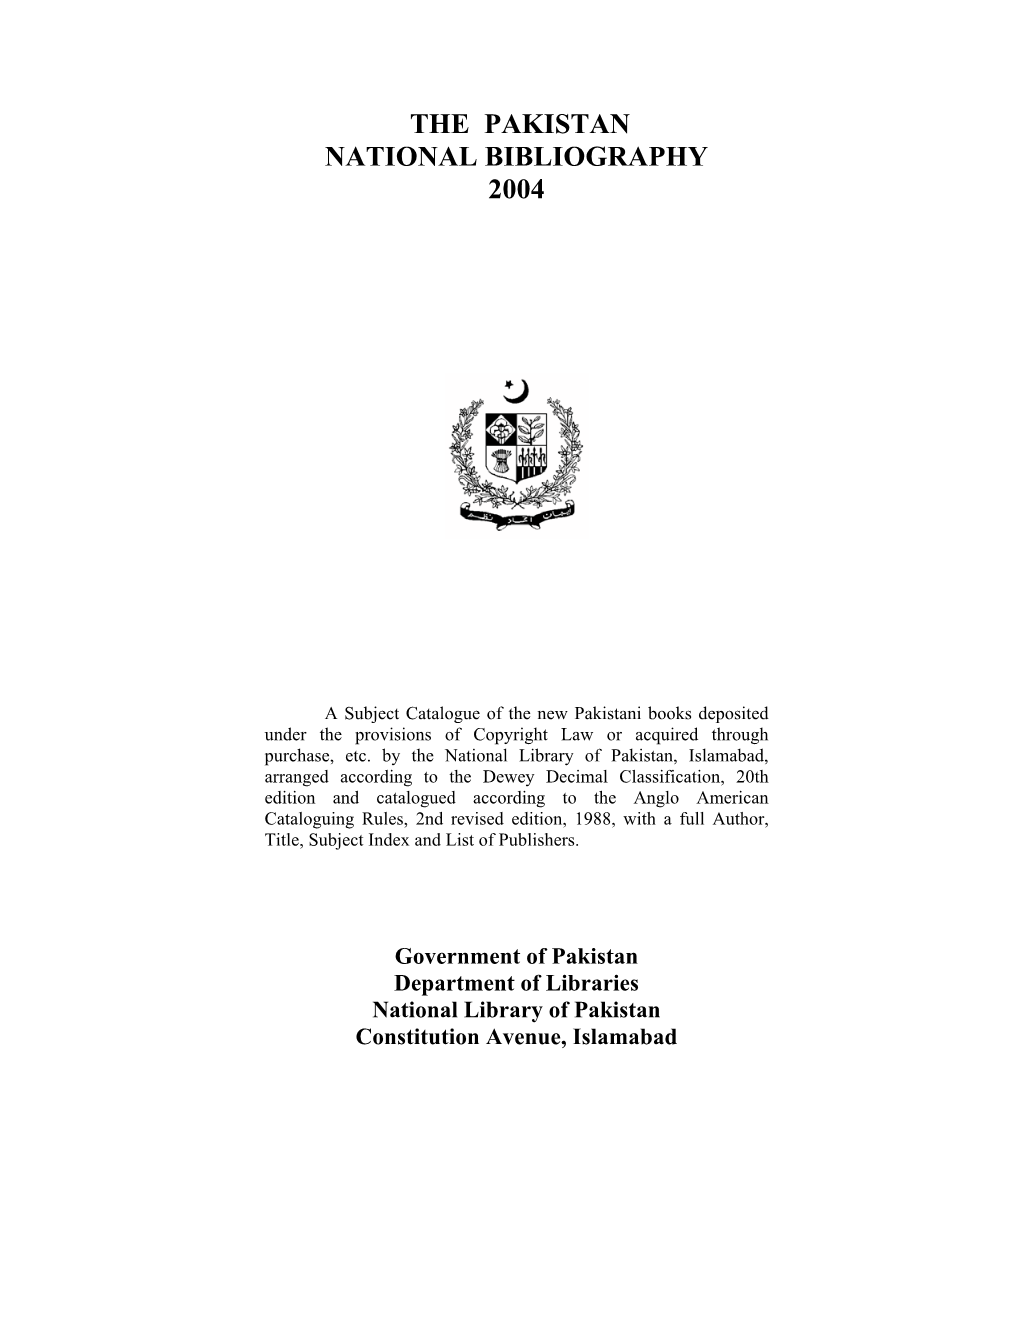 The Pakistan National Bibliography 2004